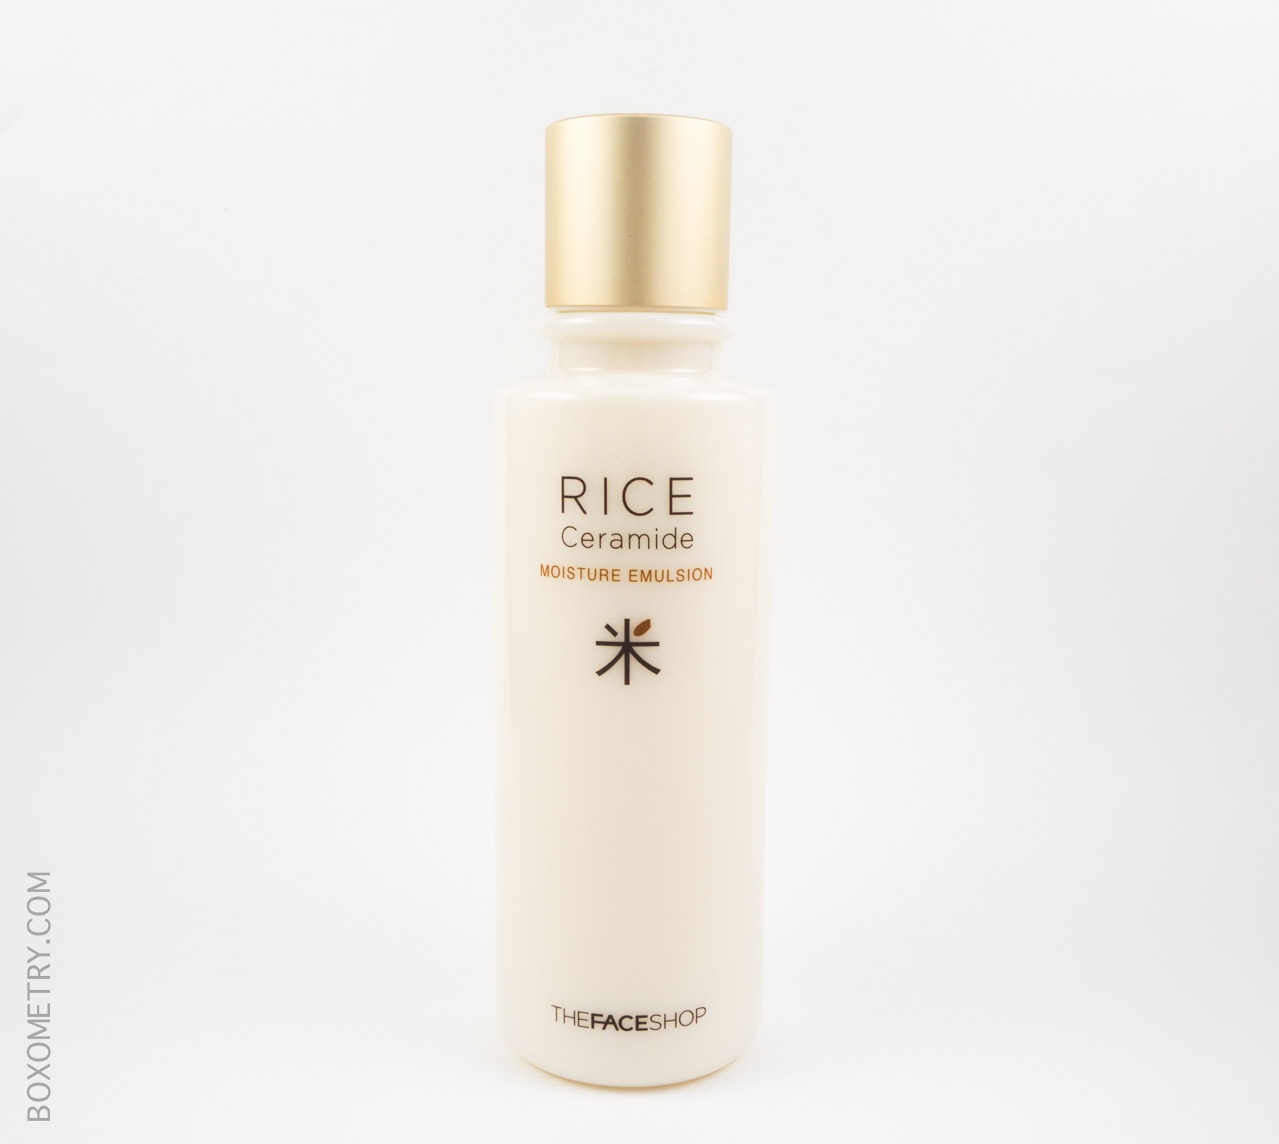 Boxometry MISHIBOX August 2015 Review - The Face Shop Rice & Ceramide Moisture Emulsion